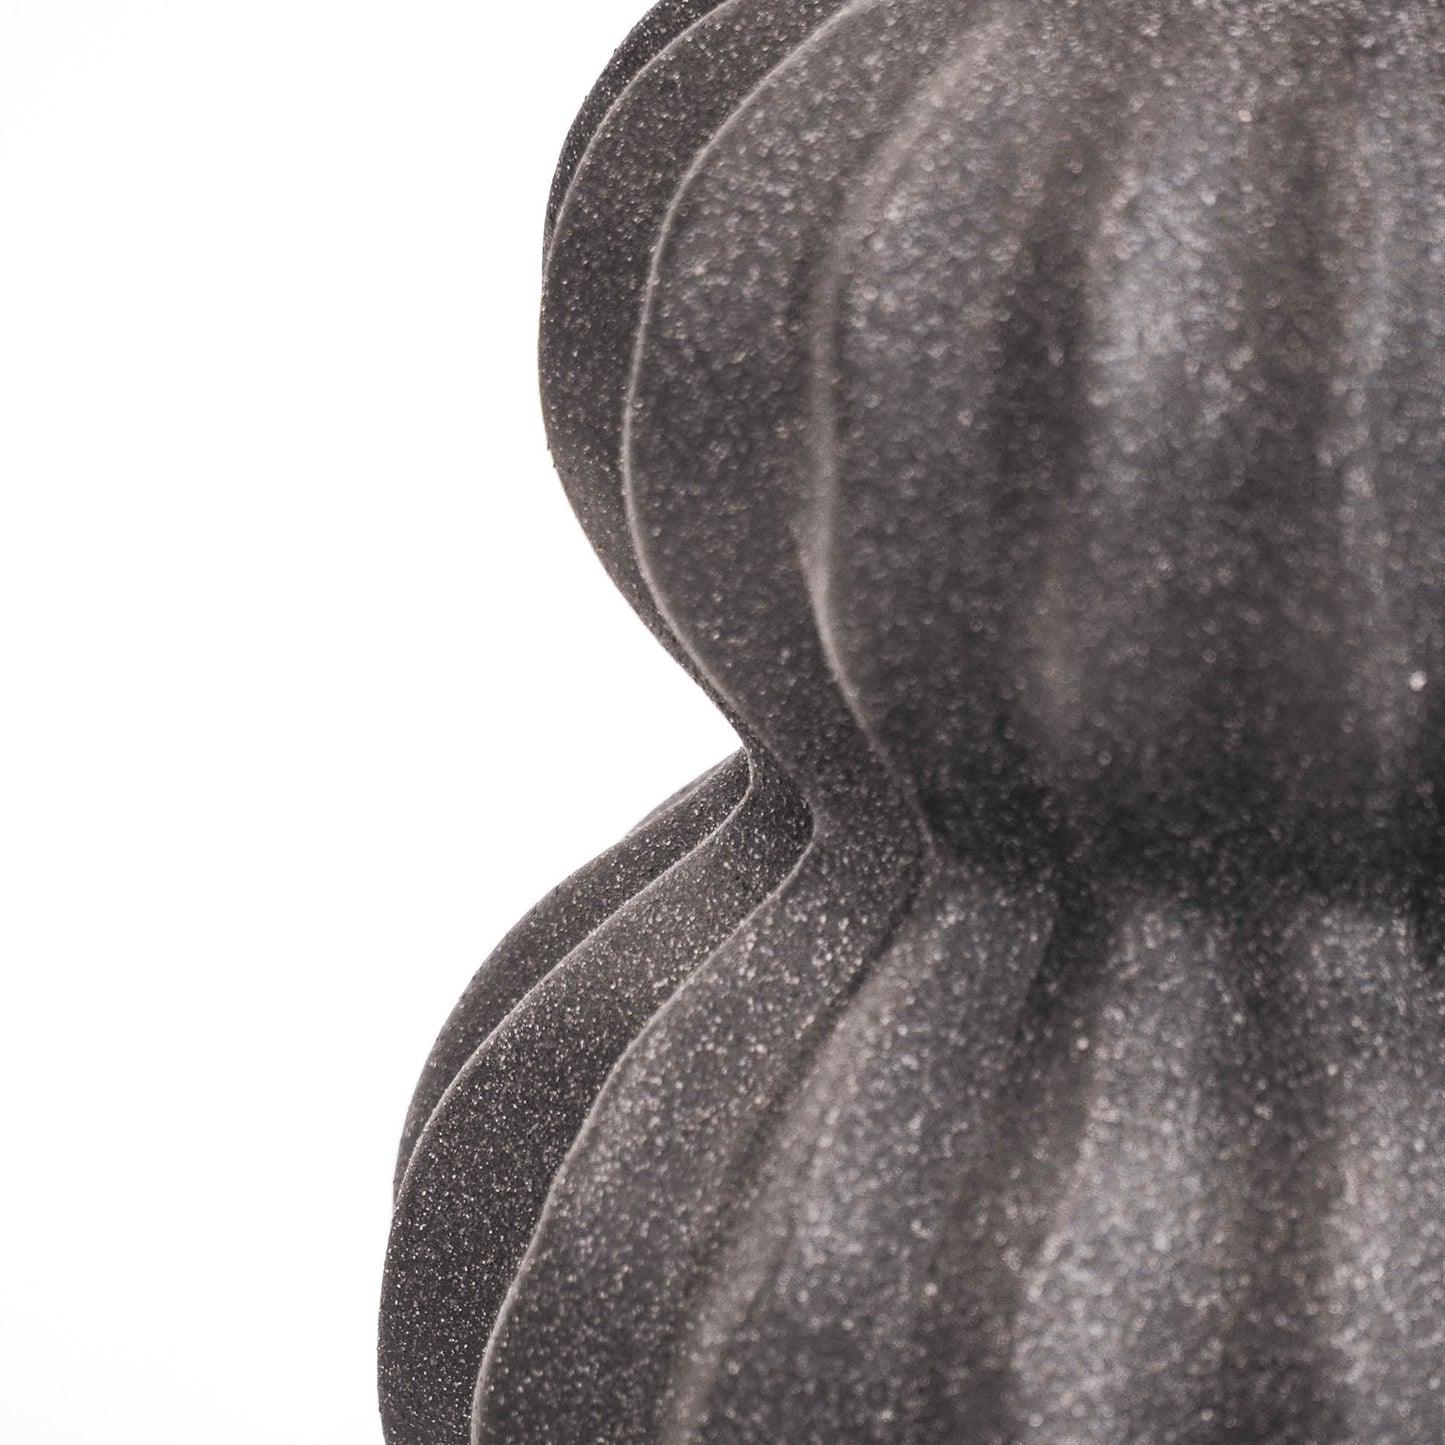 HV Organic Shape Vase - Black-15x15x24